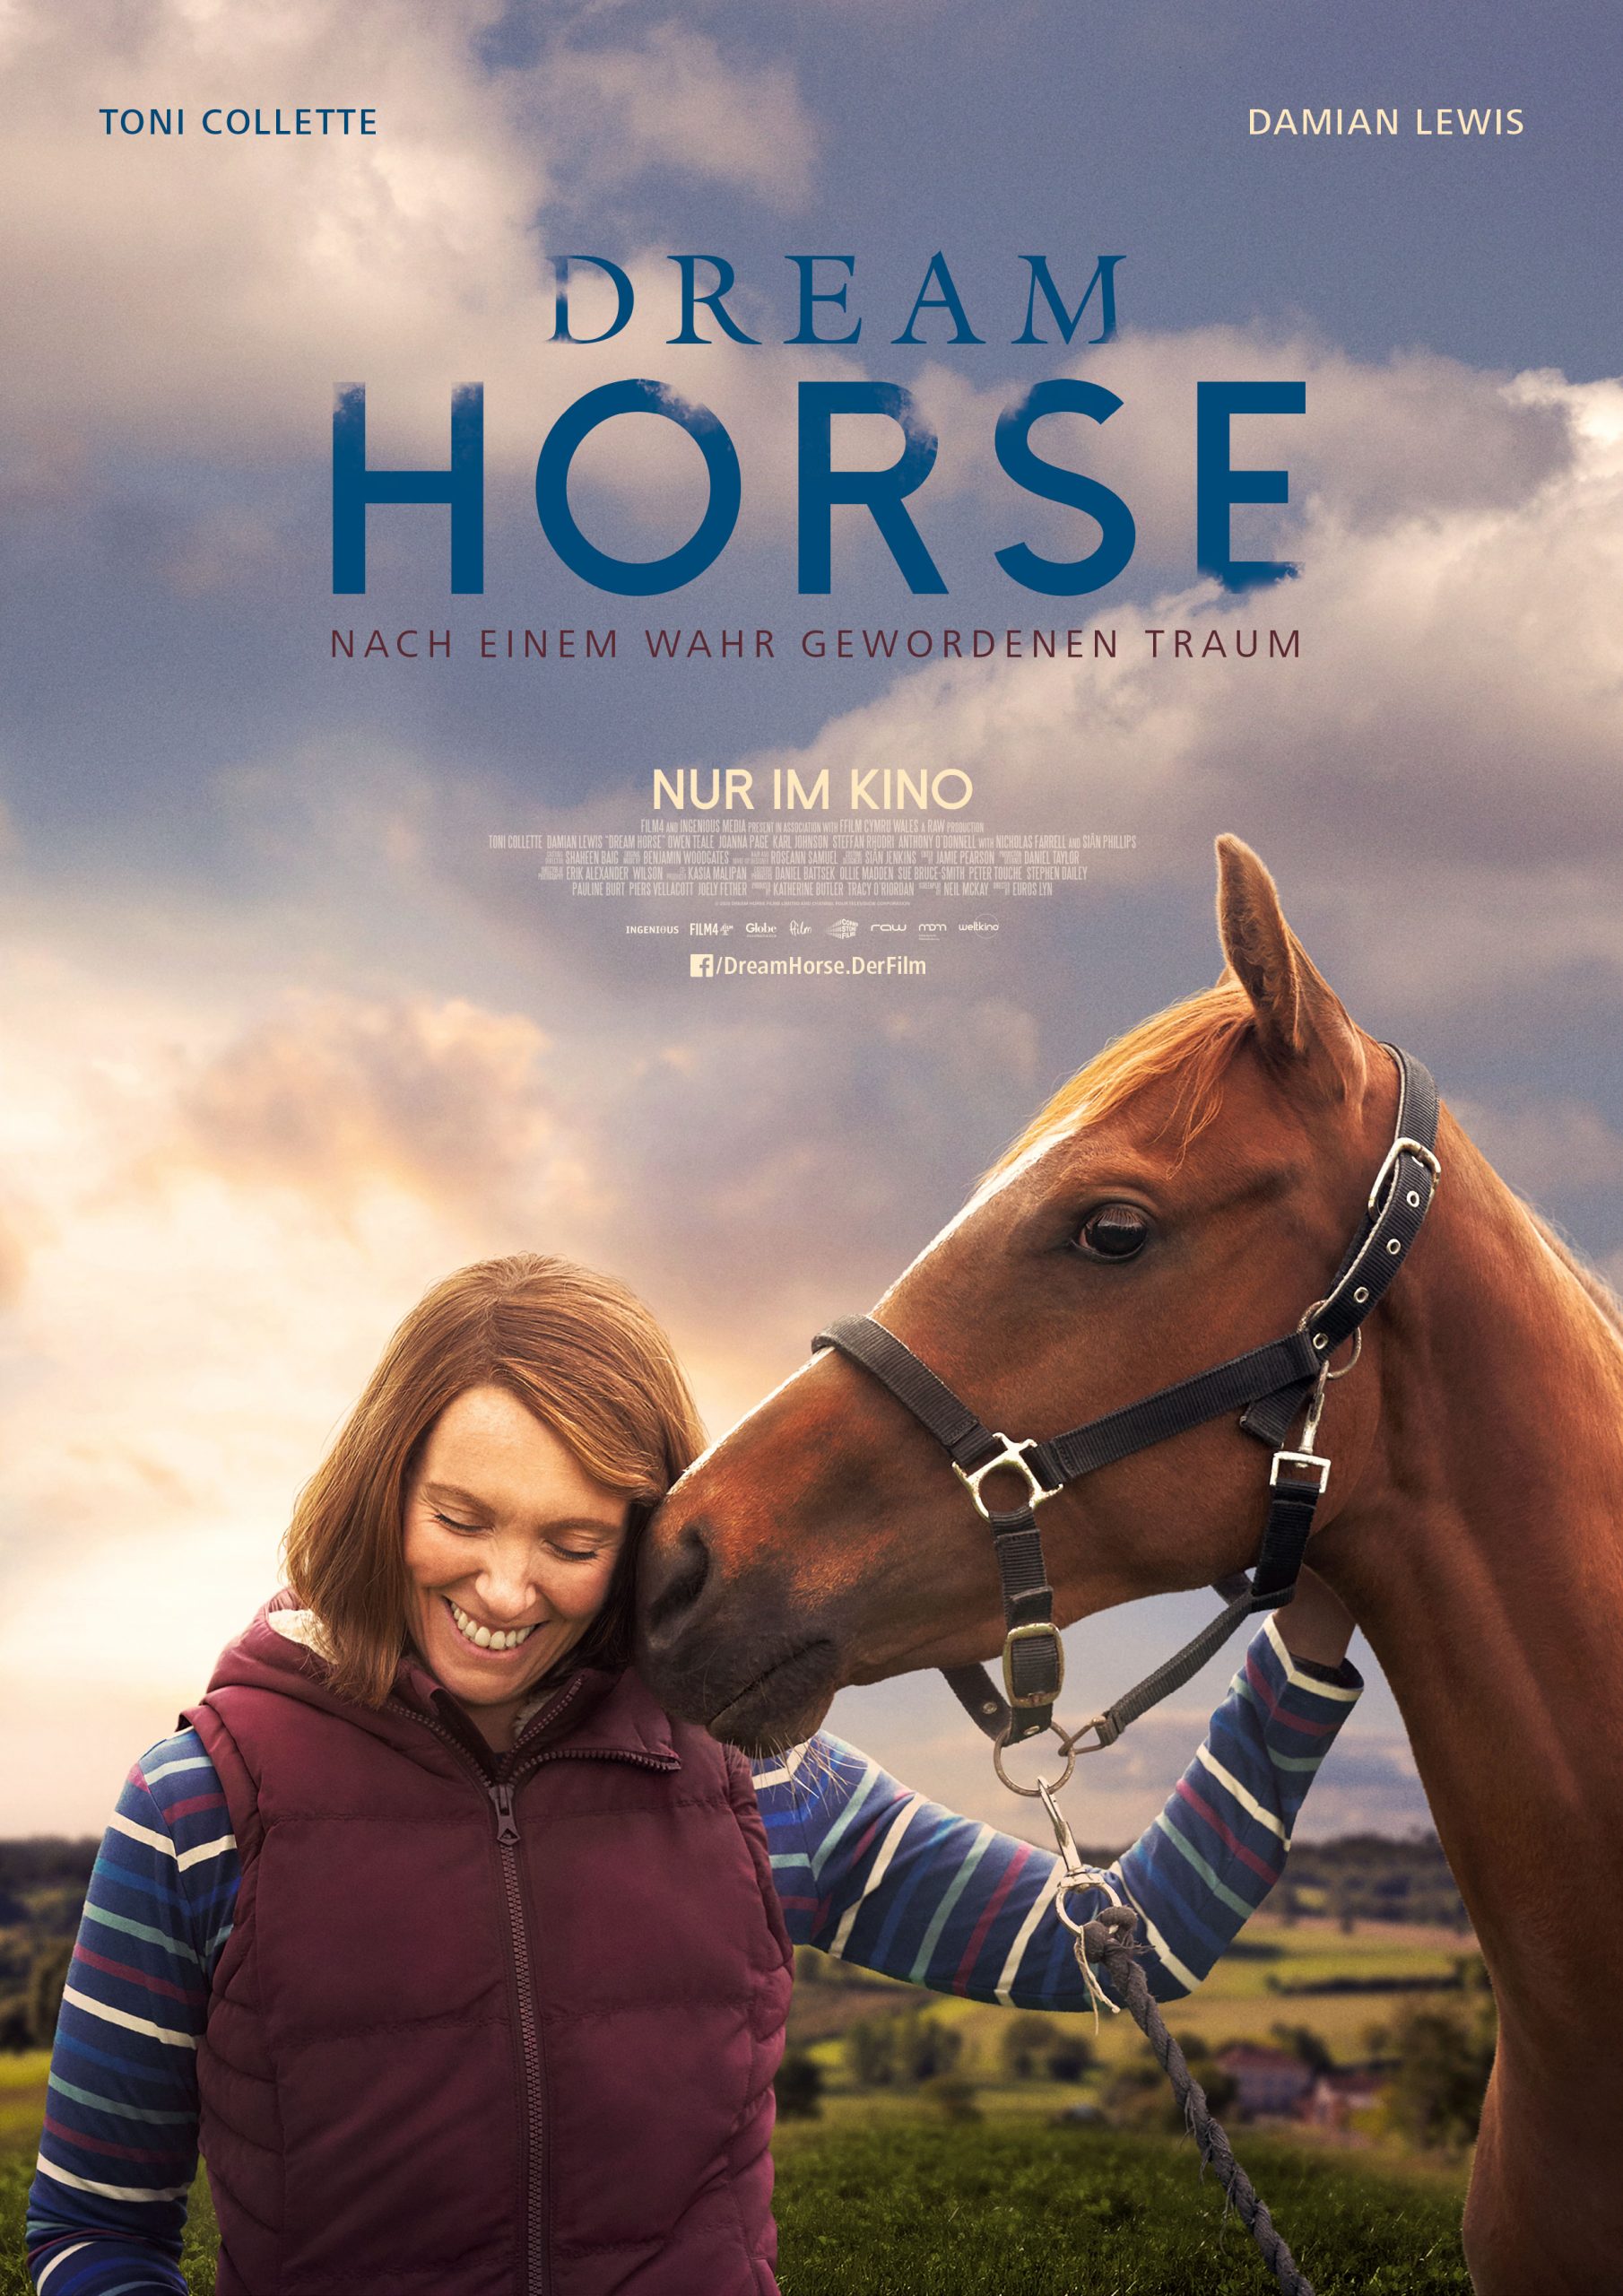 Filmplakat Dream Horse mit Tony Collette